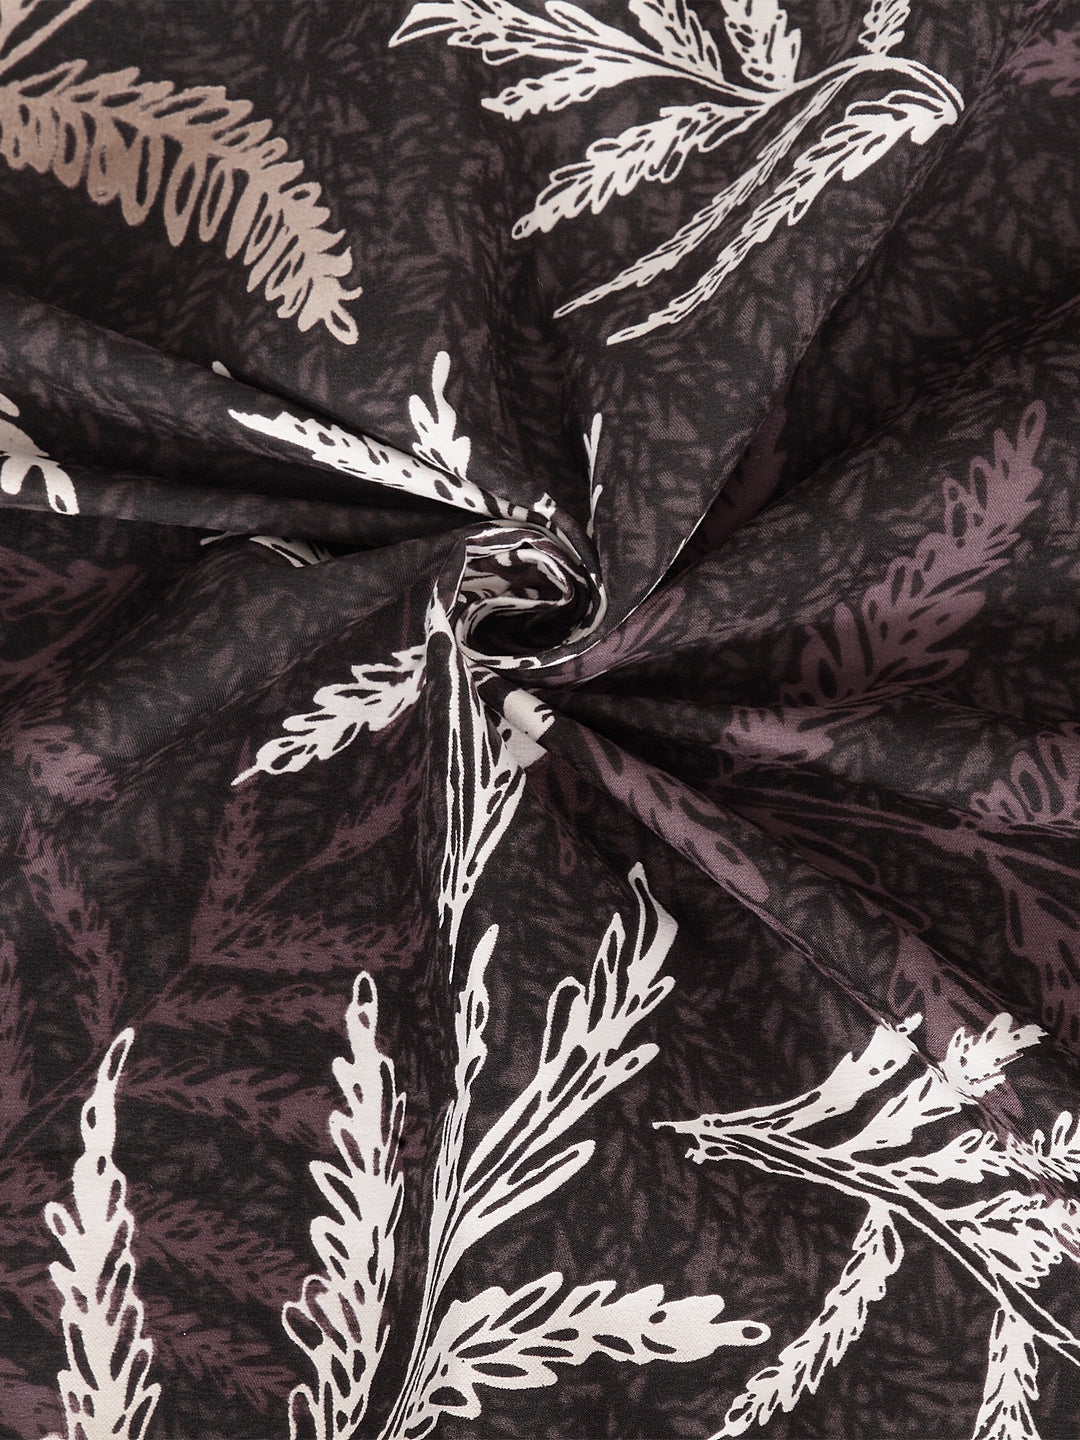 Arrabi Brown Leaf TC Cotton Blend King Bedsheet with 2 Pillow Cover (250 x 220 cm)